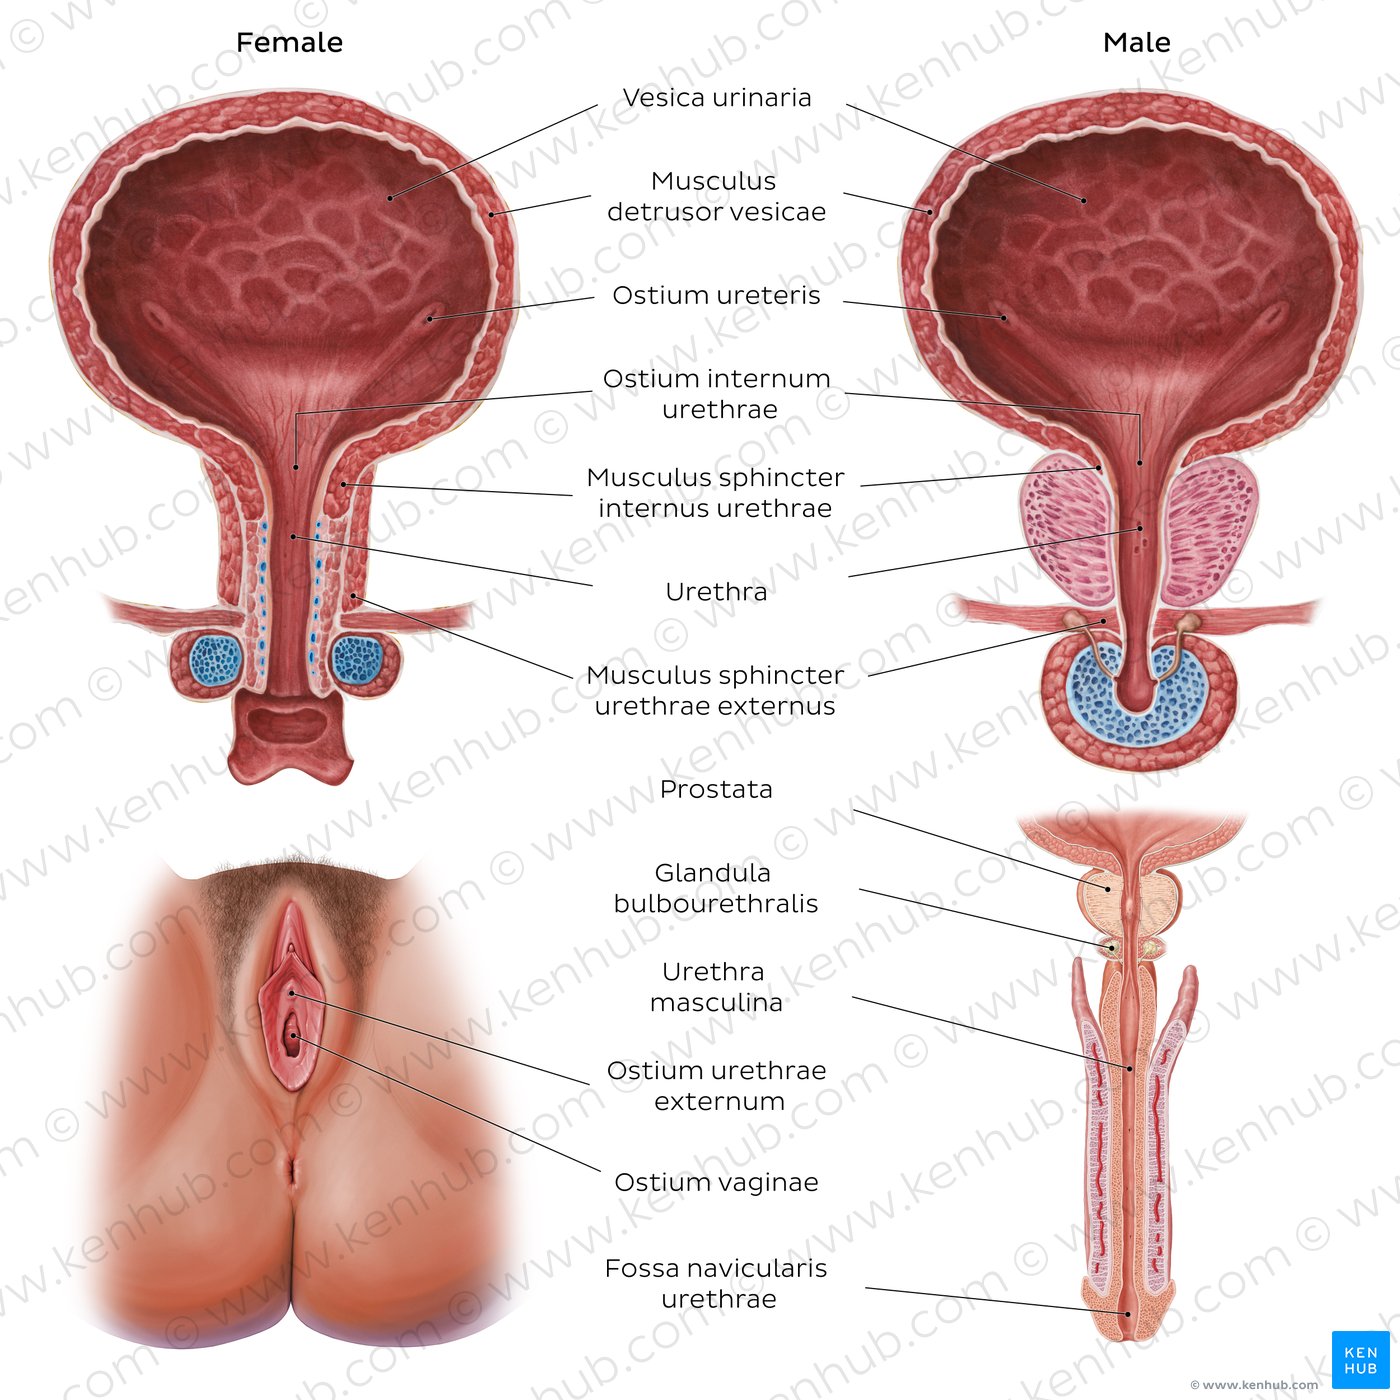 Pelvic urinary system labeled